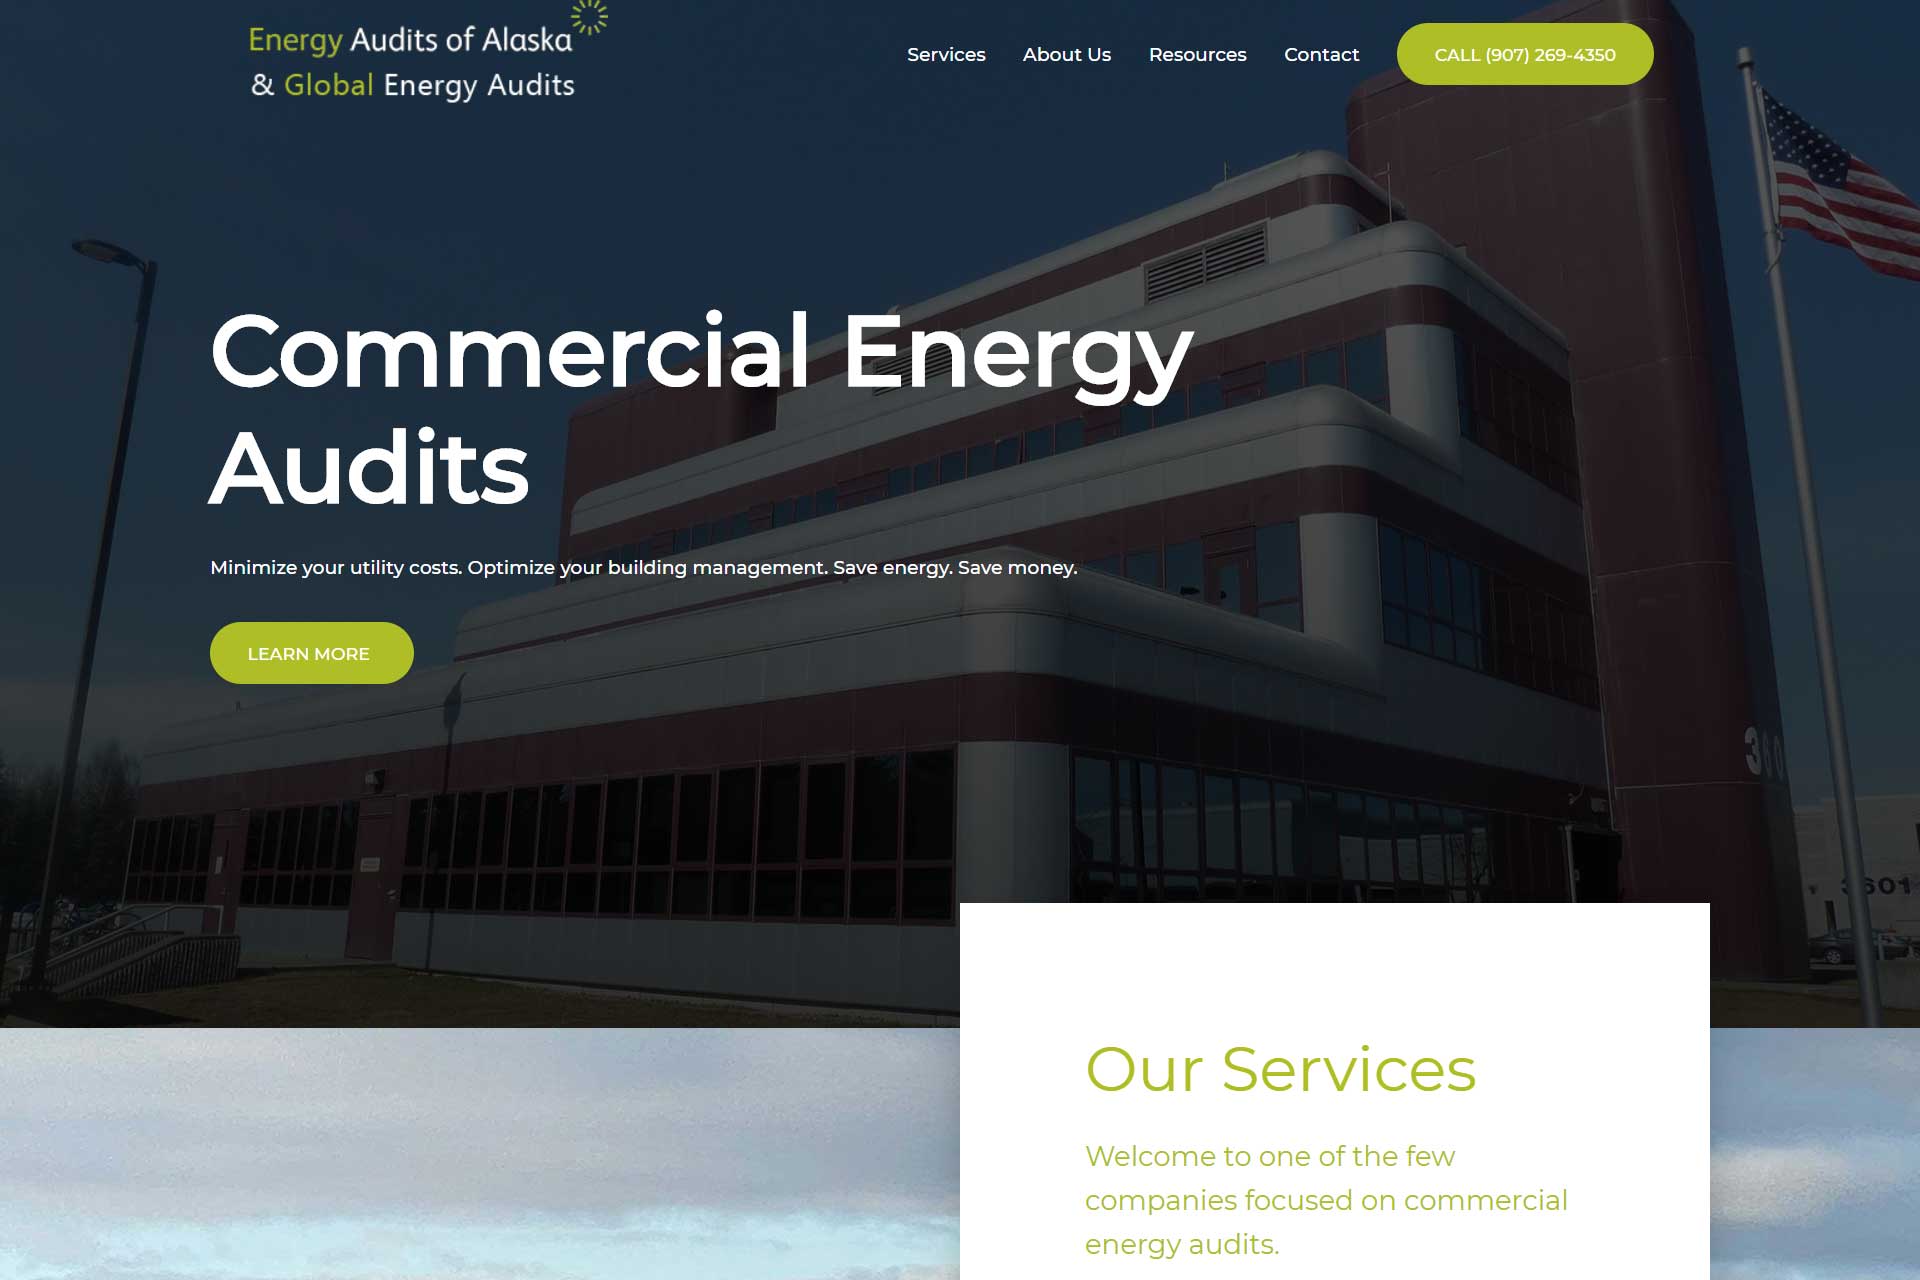 Energy Audits of Alaska